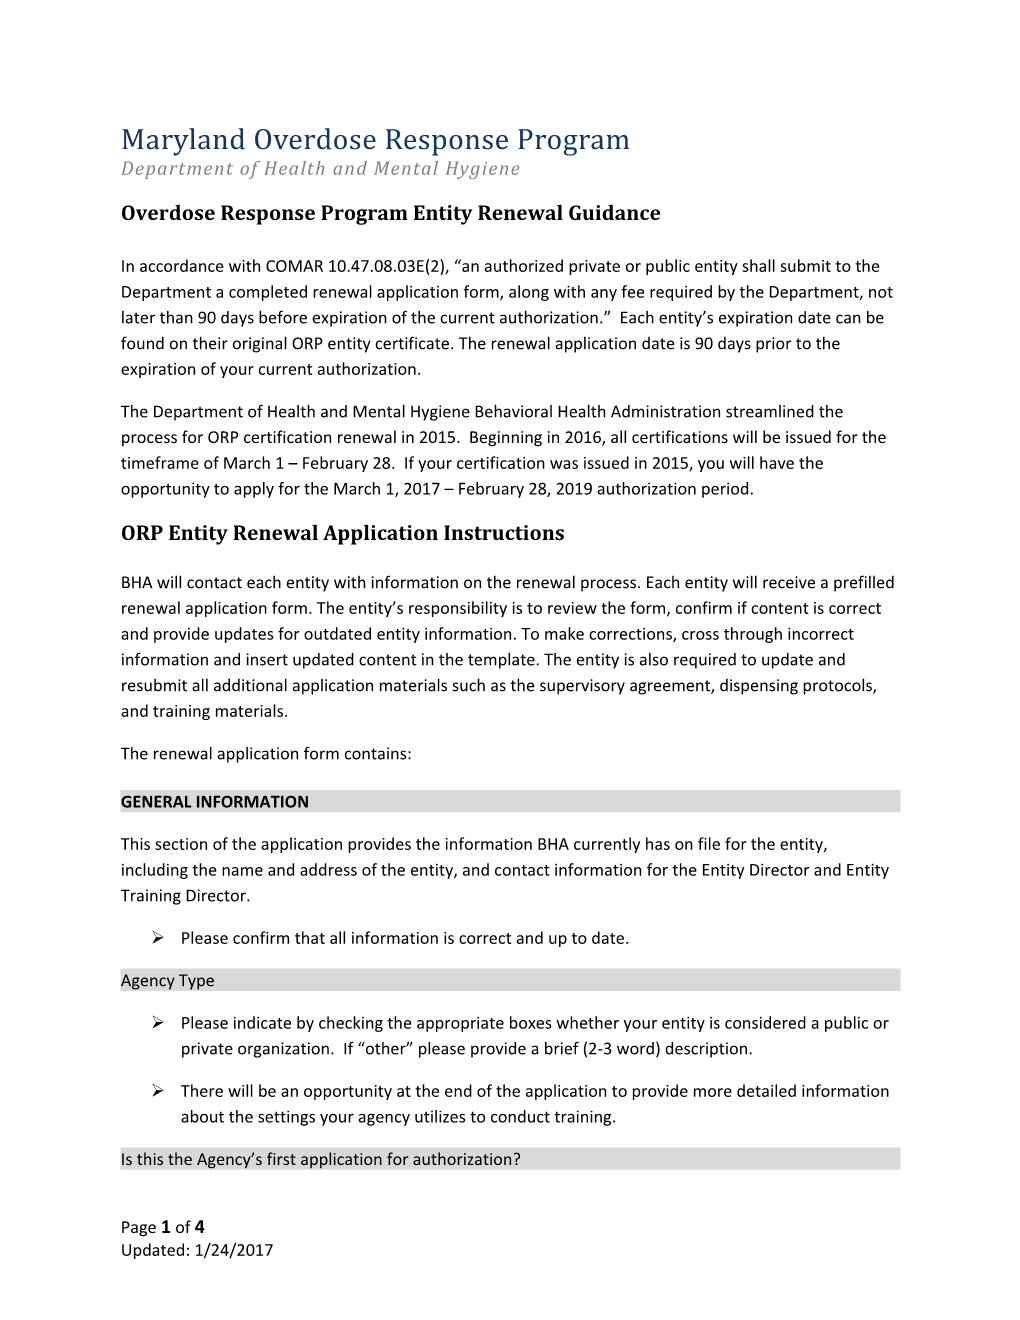 Overdose Response Program Entity Renewal Guidance